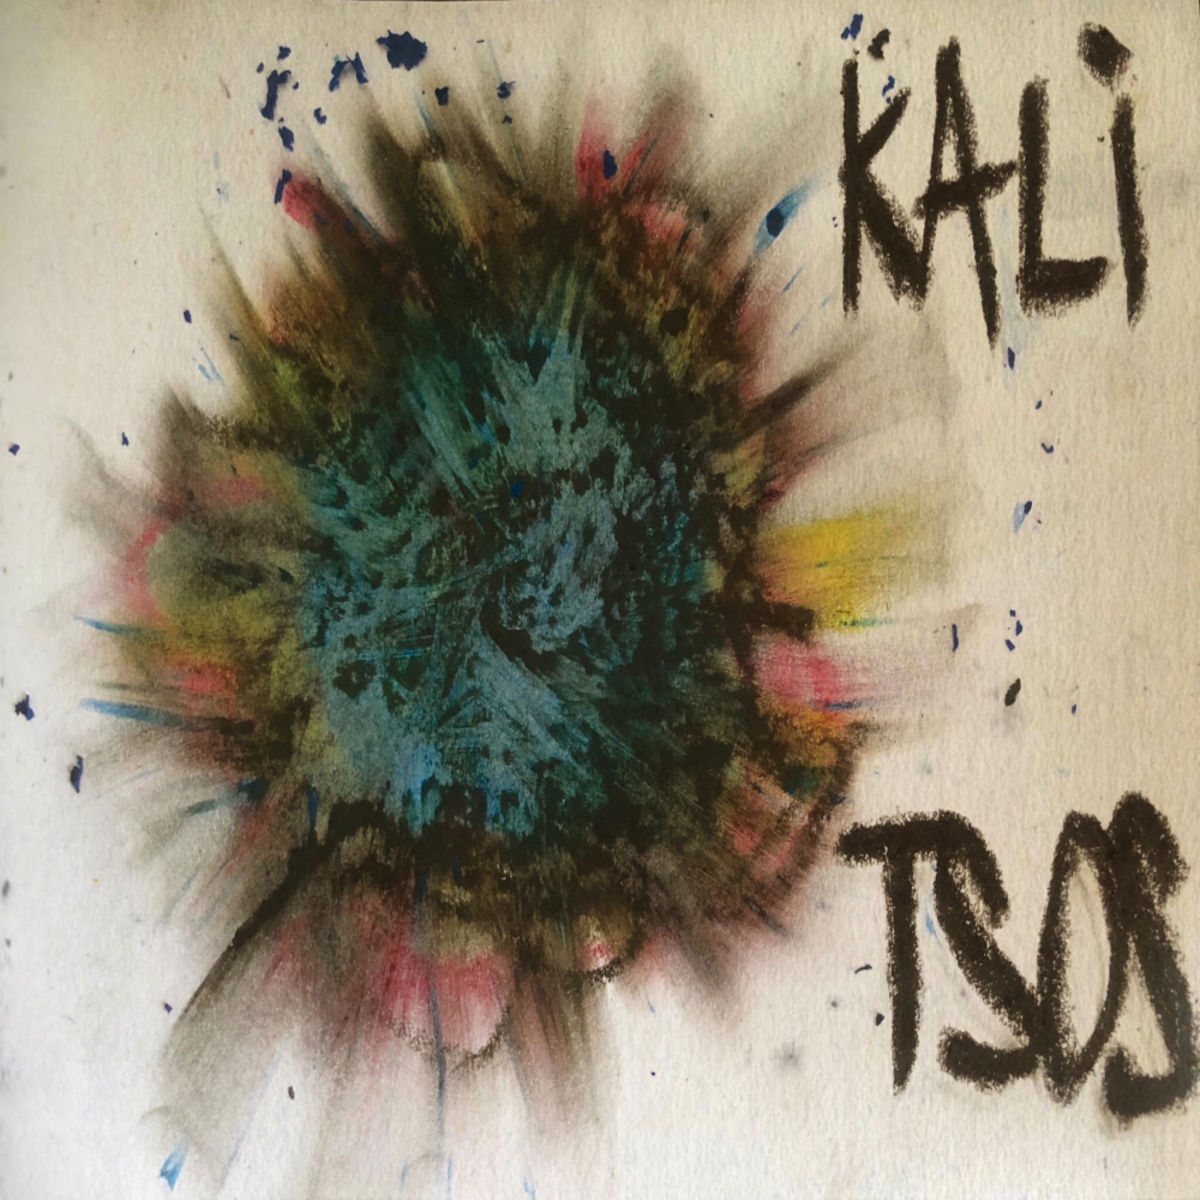 TSOS - Kali / Visile Records